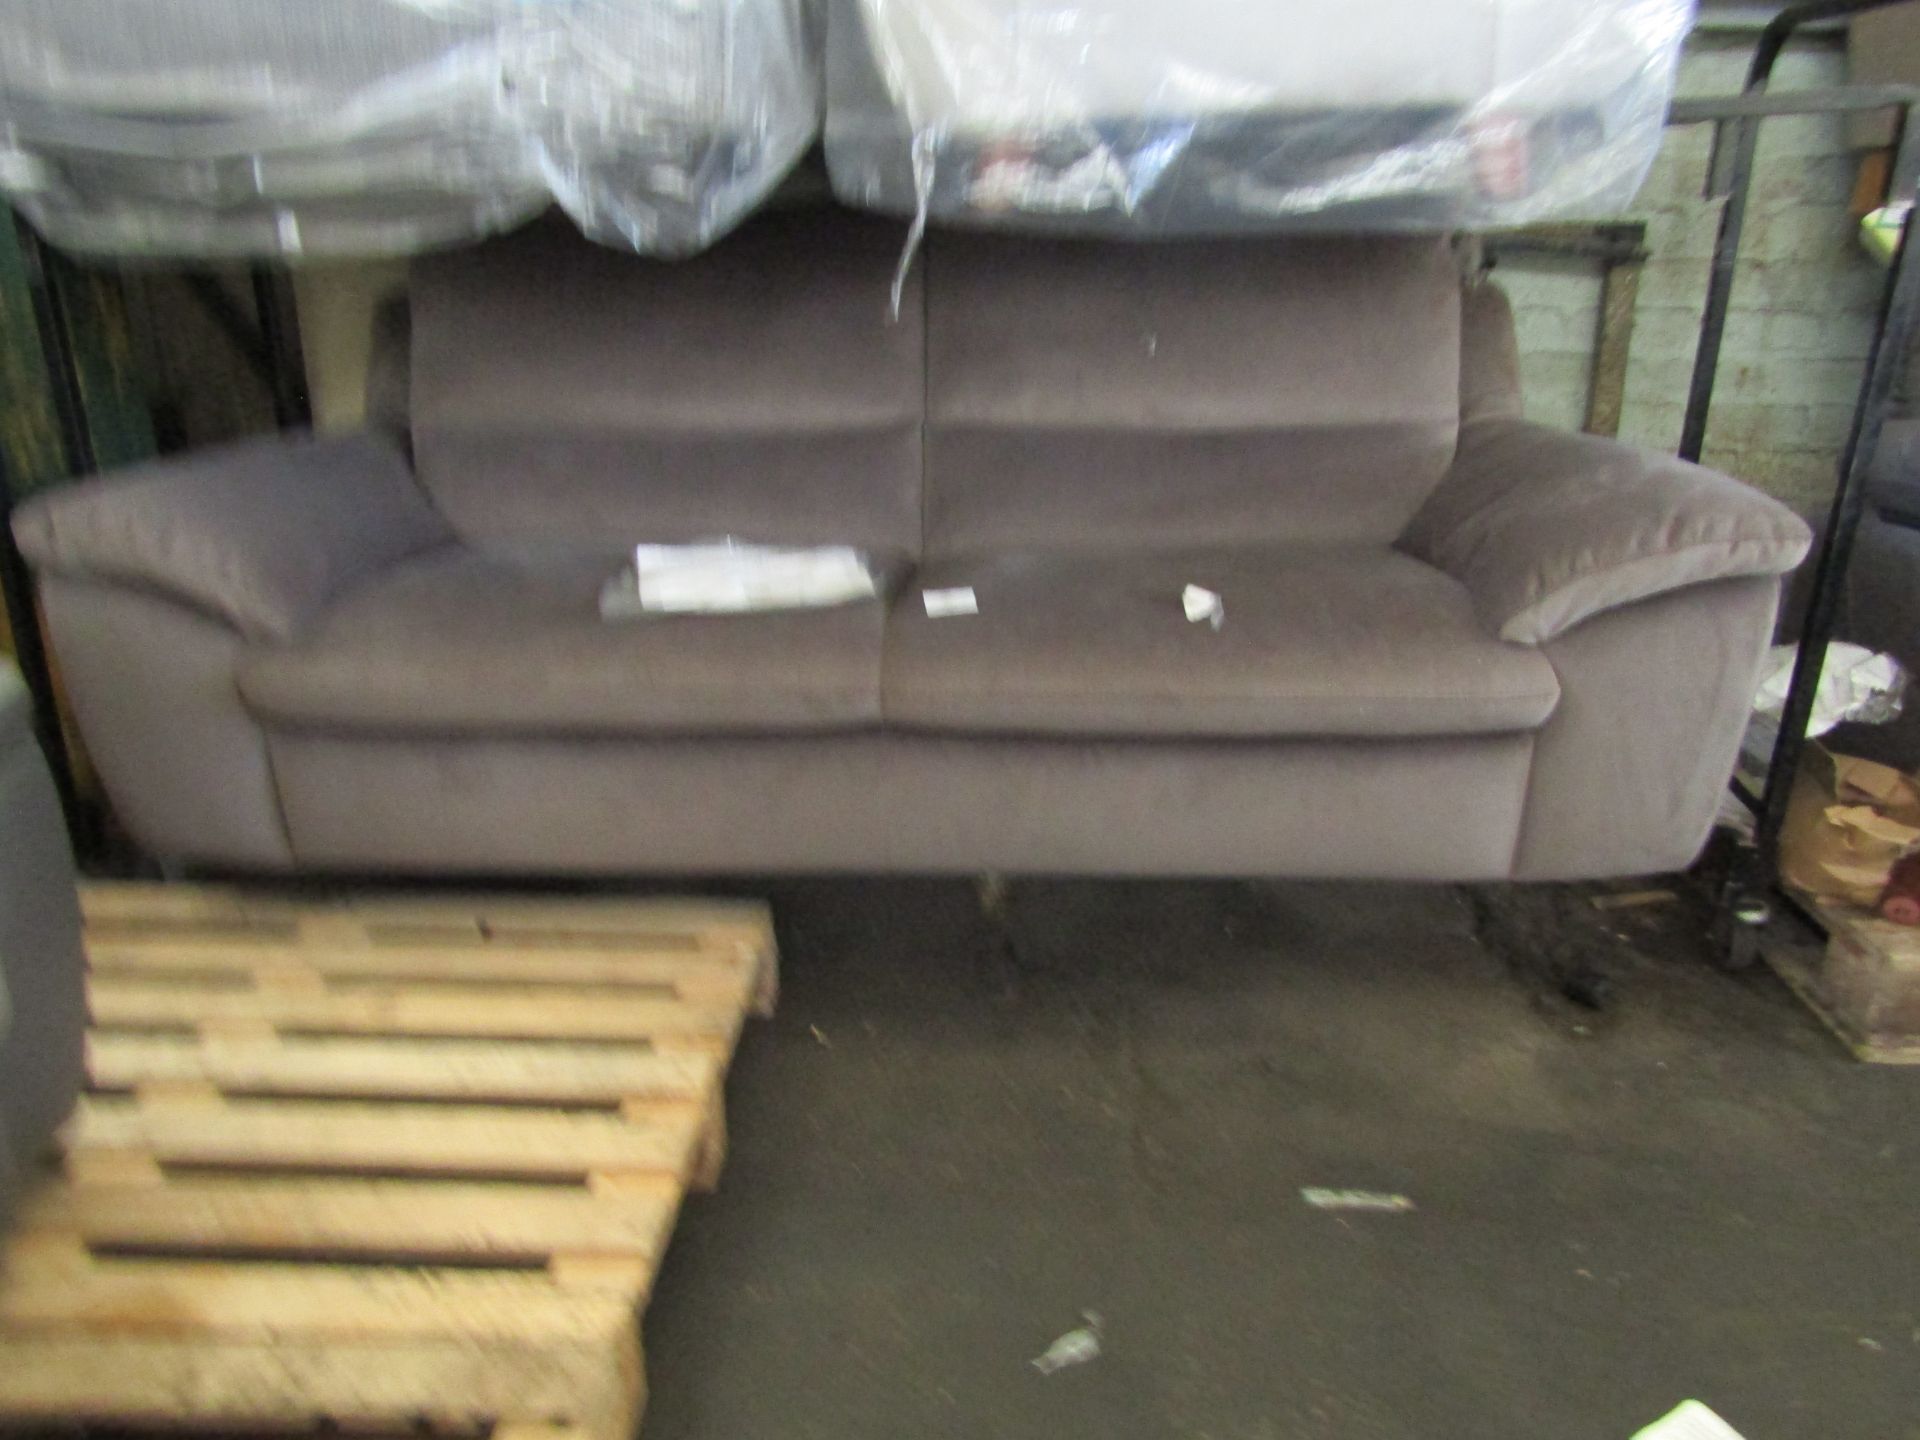 Oak Furnitureland Salento 3 Seater Sofa in Grey Fabric RRP 1399.99 Sofa has compression marks - Image 2 of 2